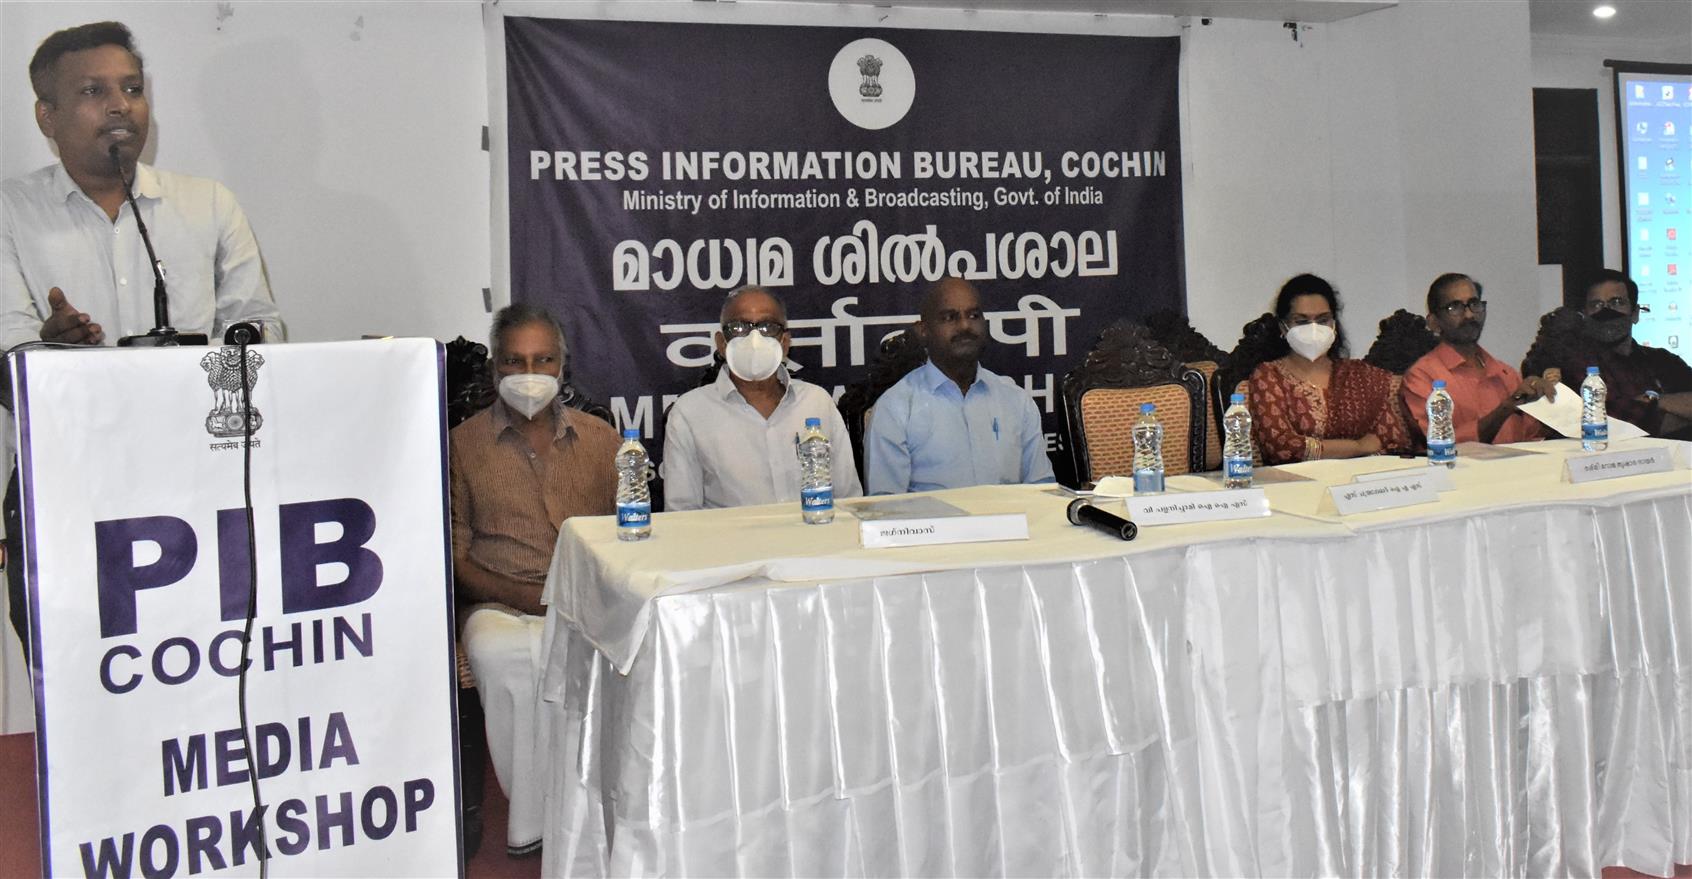 Kannur District Collector S Chandrasekhar inaugurating the Press Information Bureau’s Media Workshop at Payyannur.

